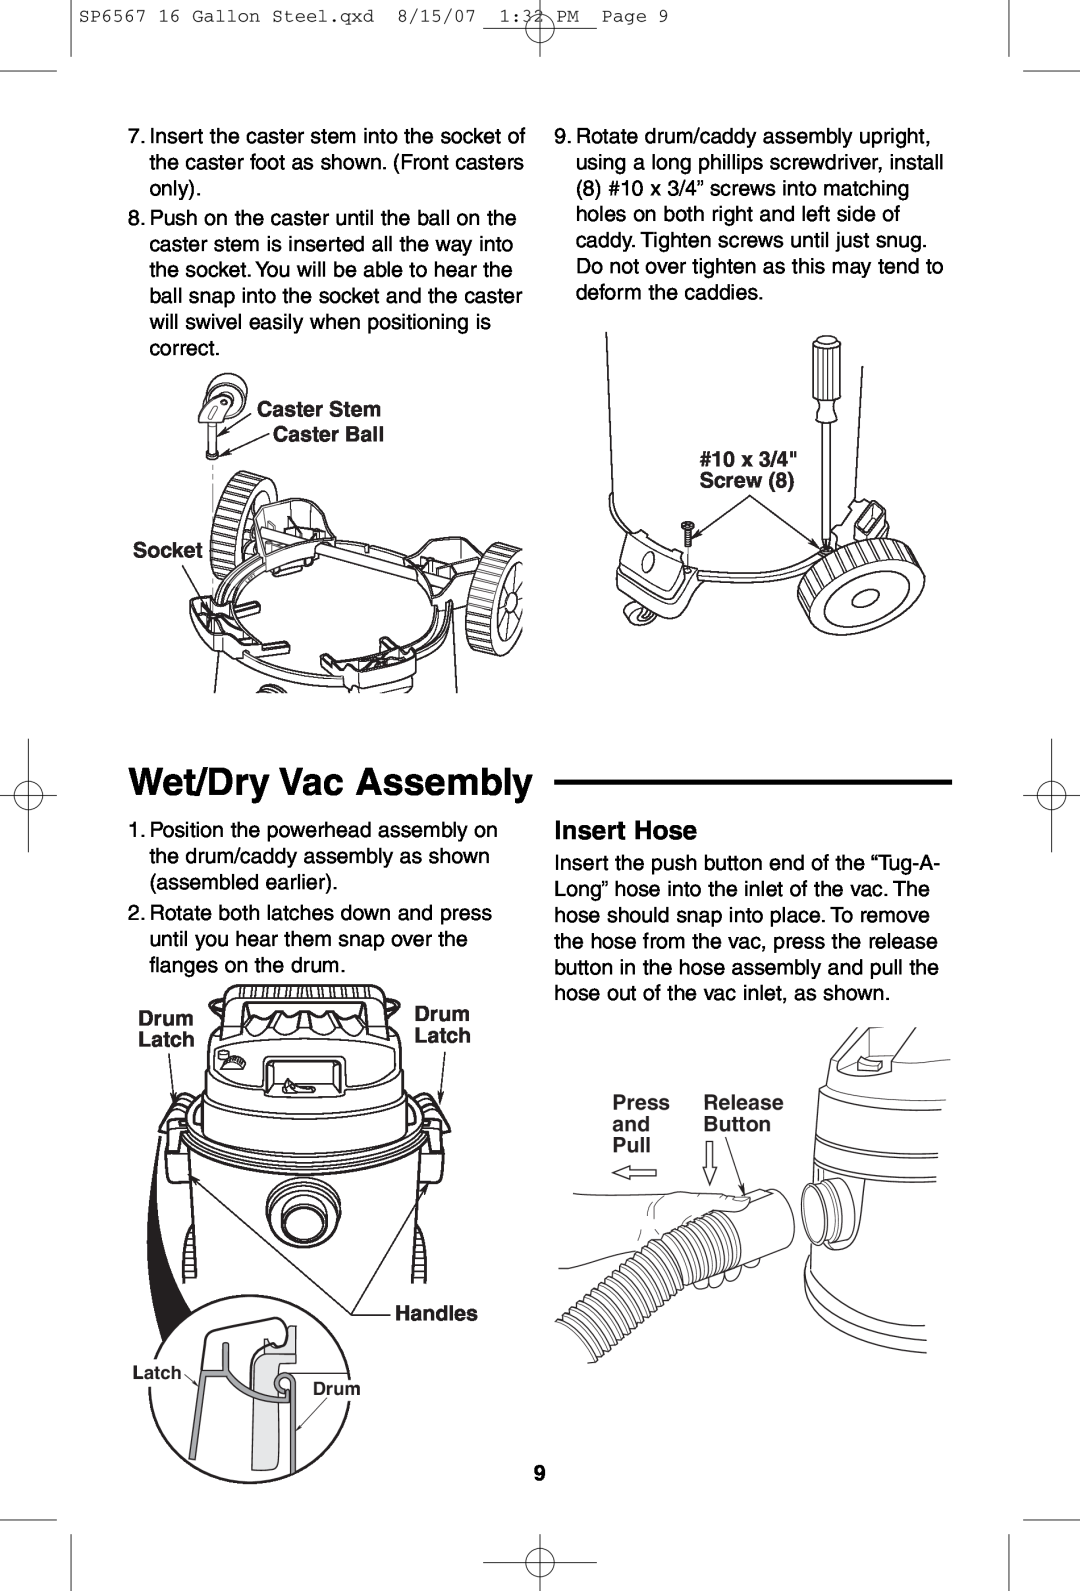 RIDGID WD1950 manual Wet/Dry Vac Assembly, Insert Hose 